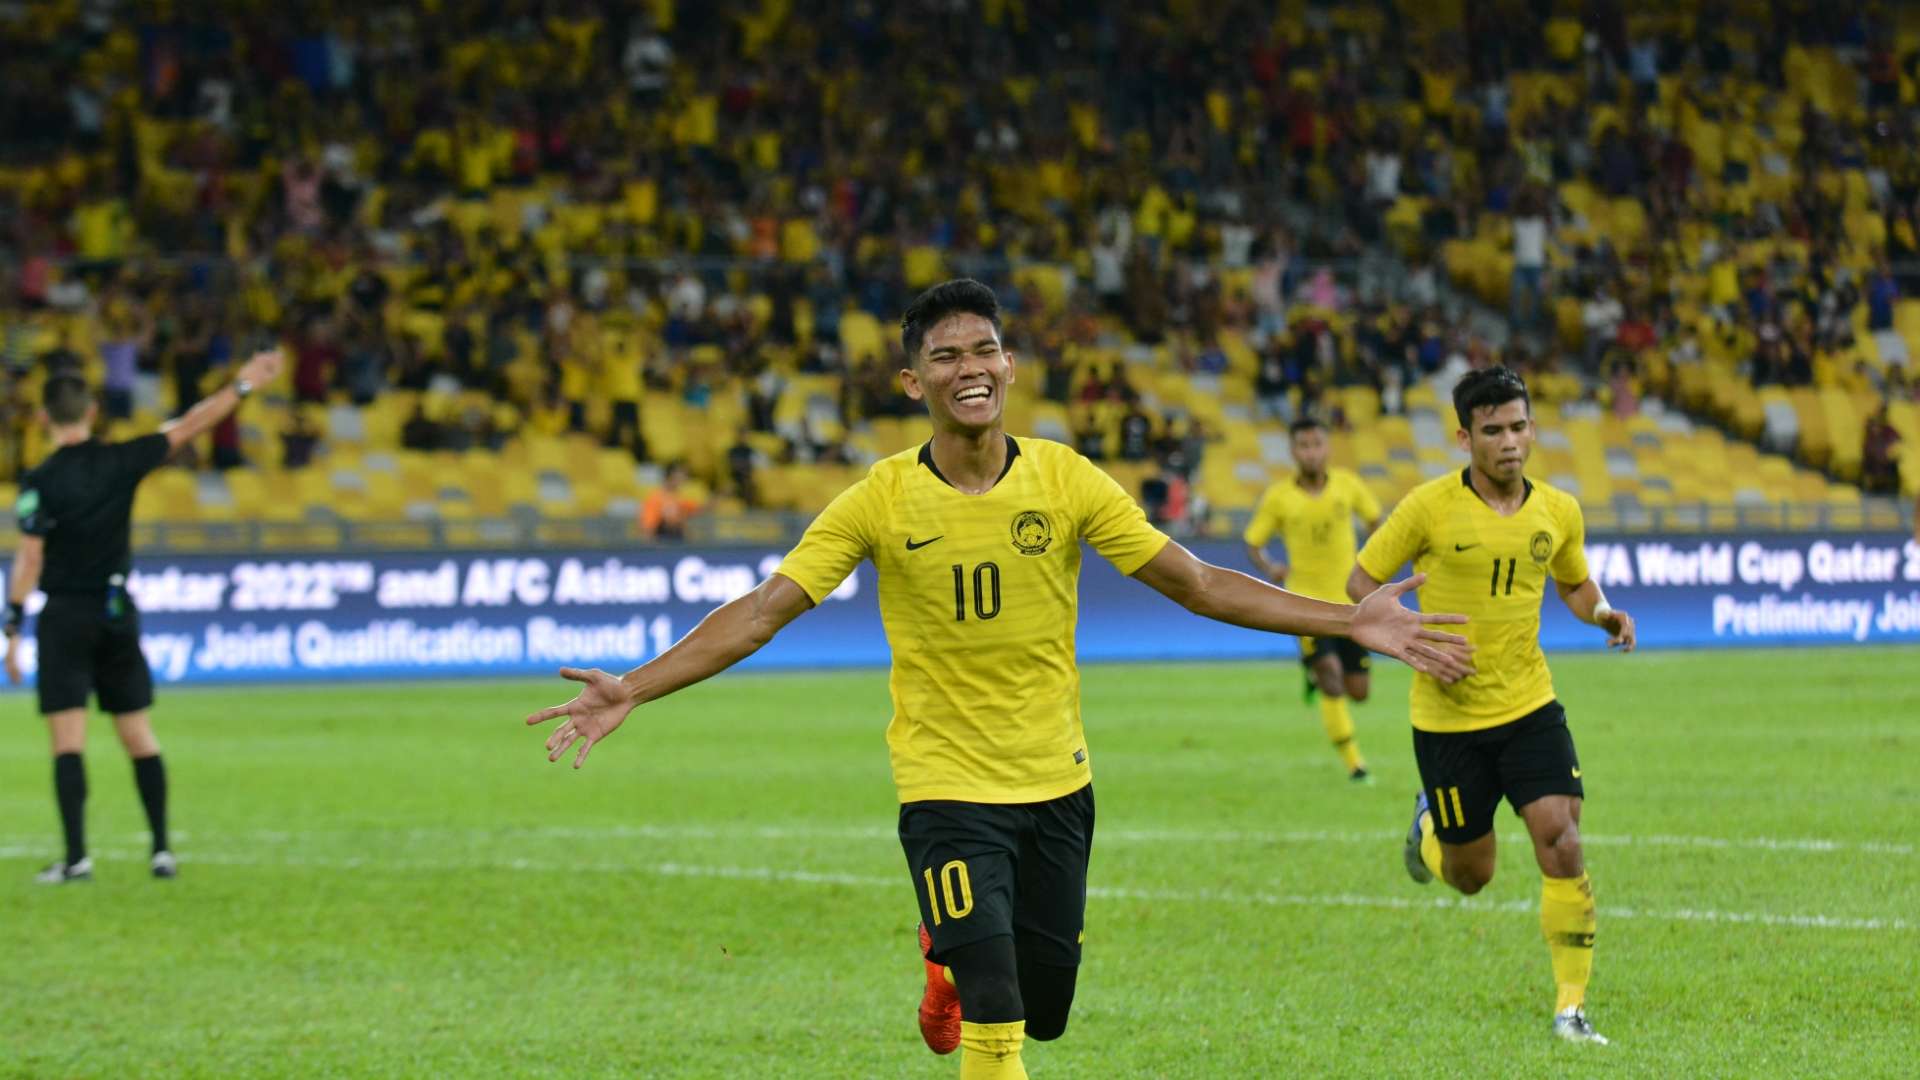 Shahrel Fikri, Malaysia v Timor Leste, 2022 World Cup Qualification, 7 Jun 2019